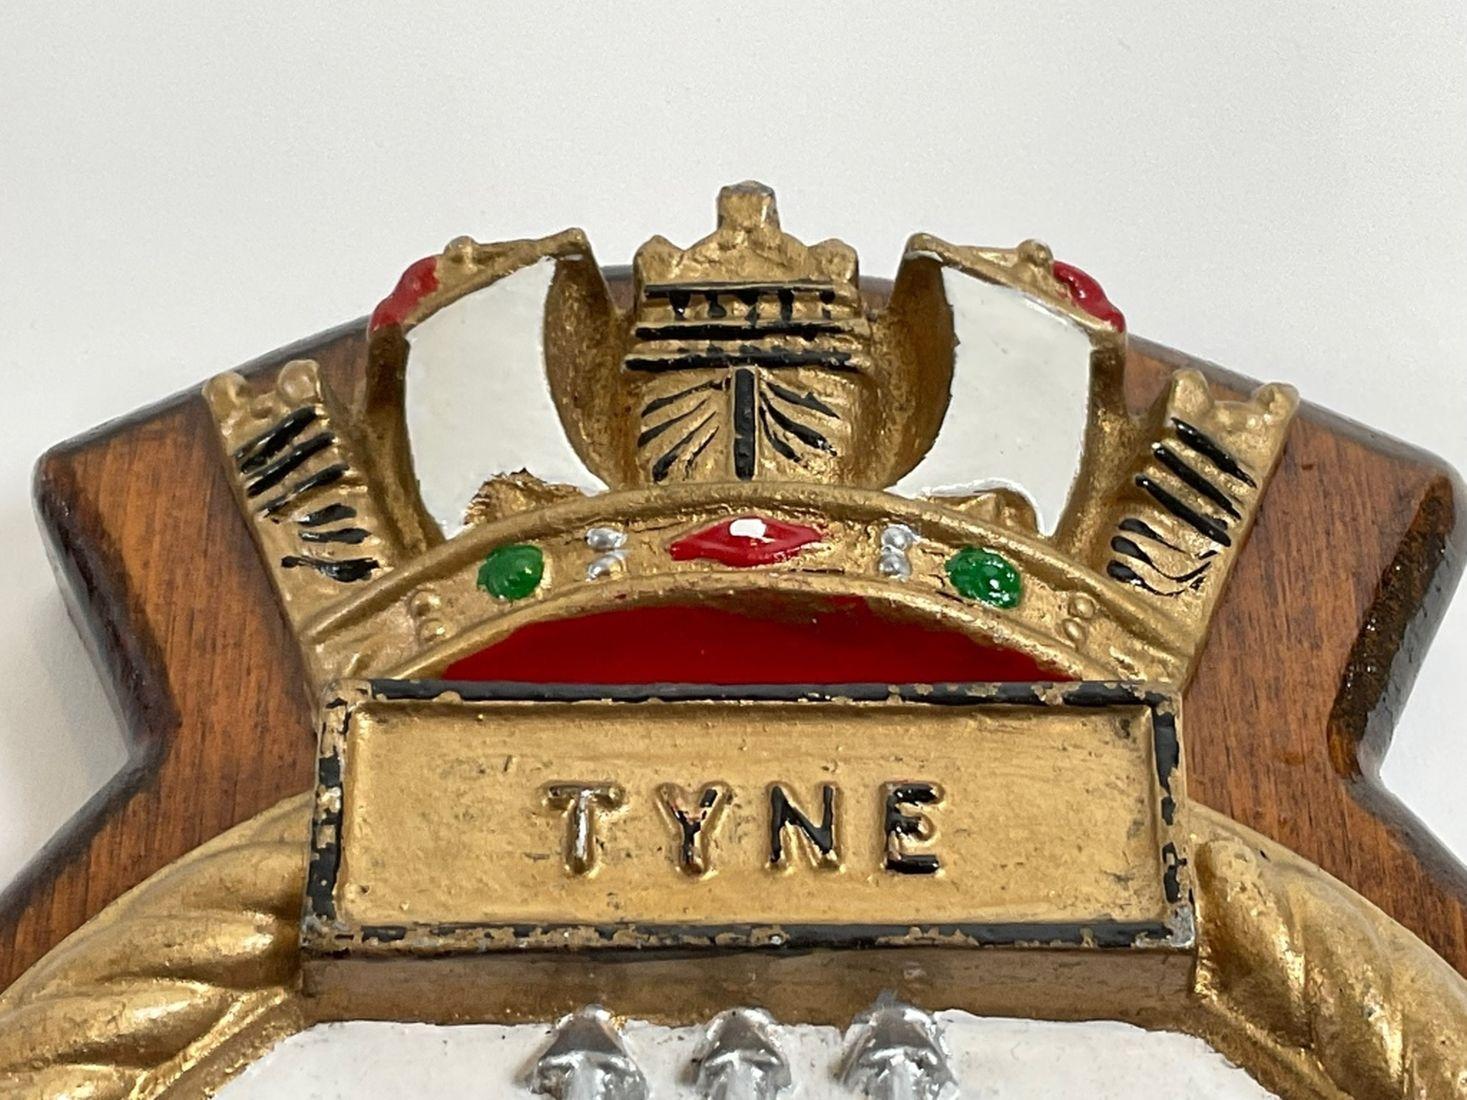 Ships Badge from HMS Tyne - Lannan Gallery